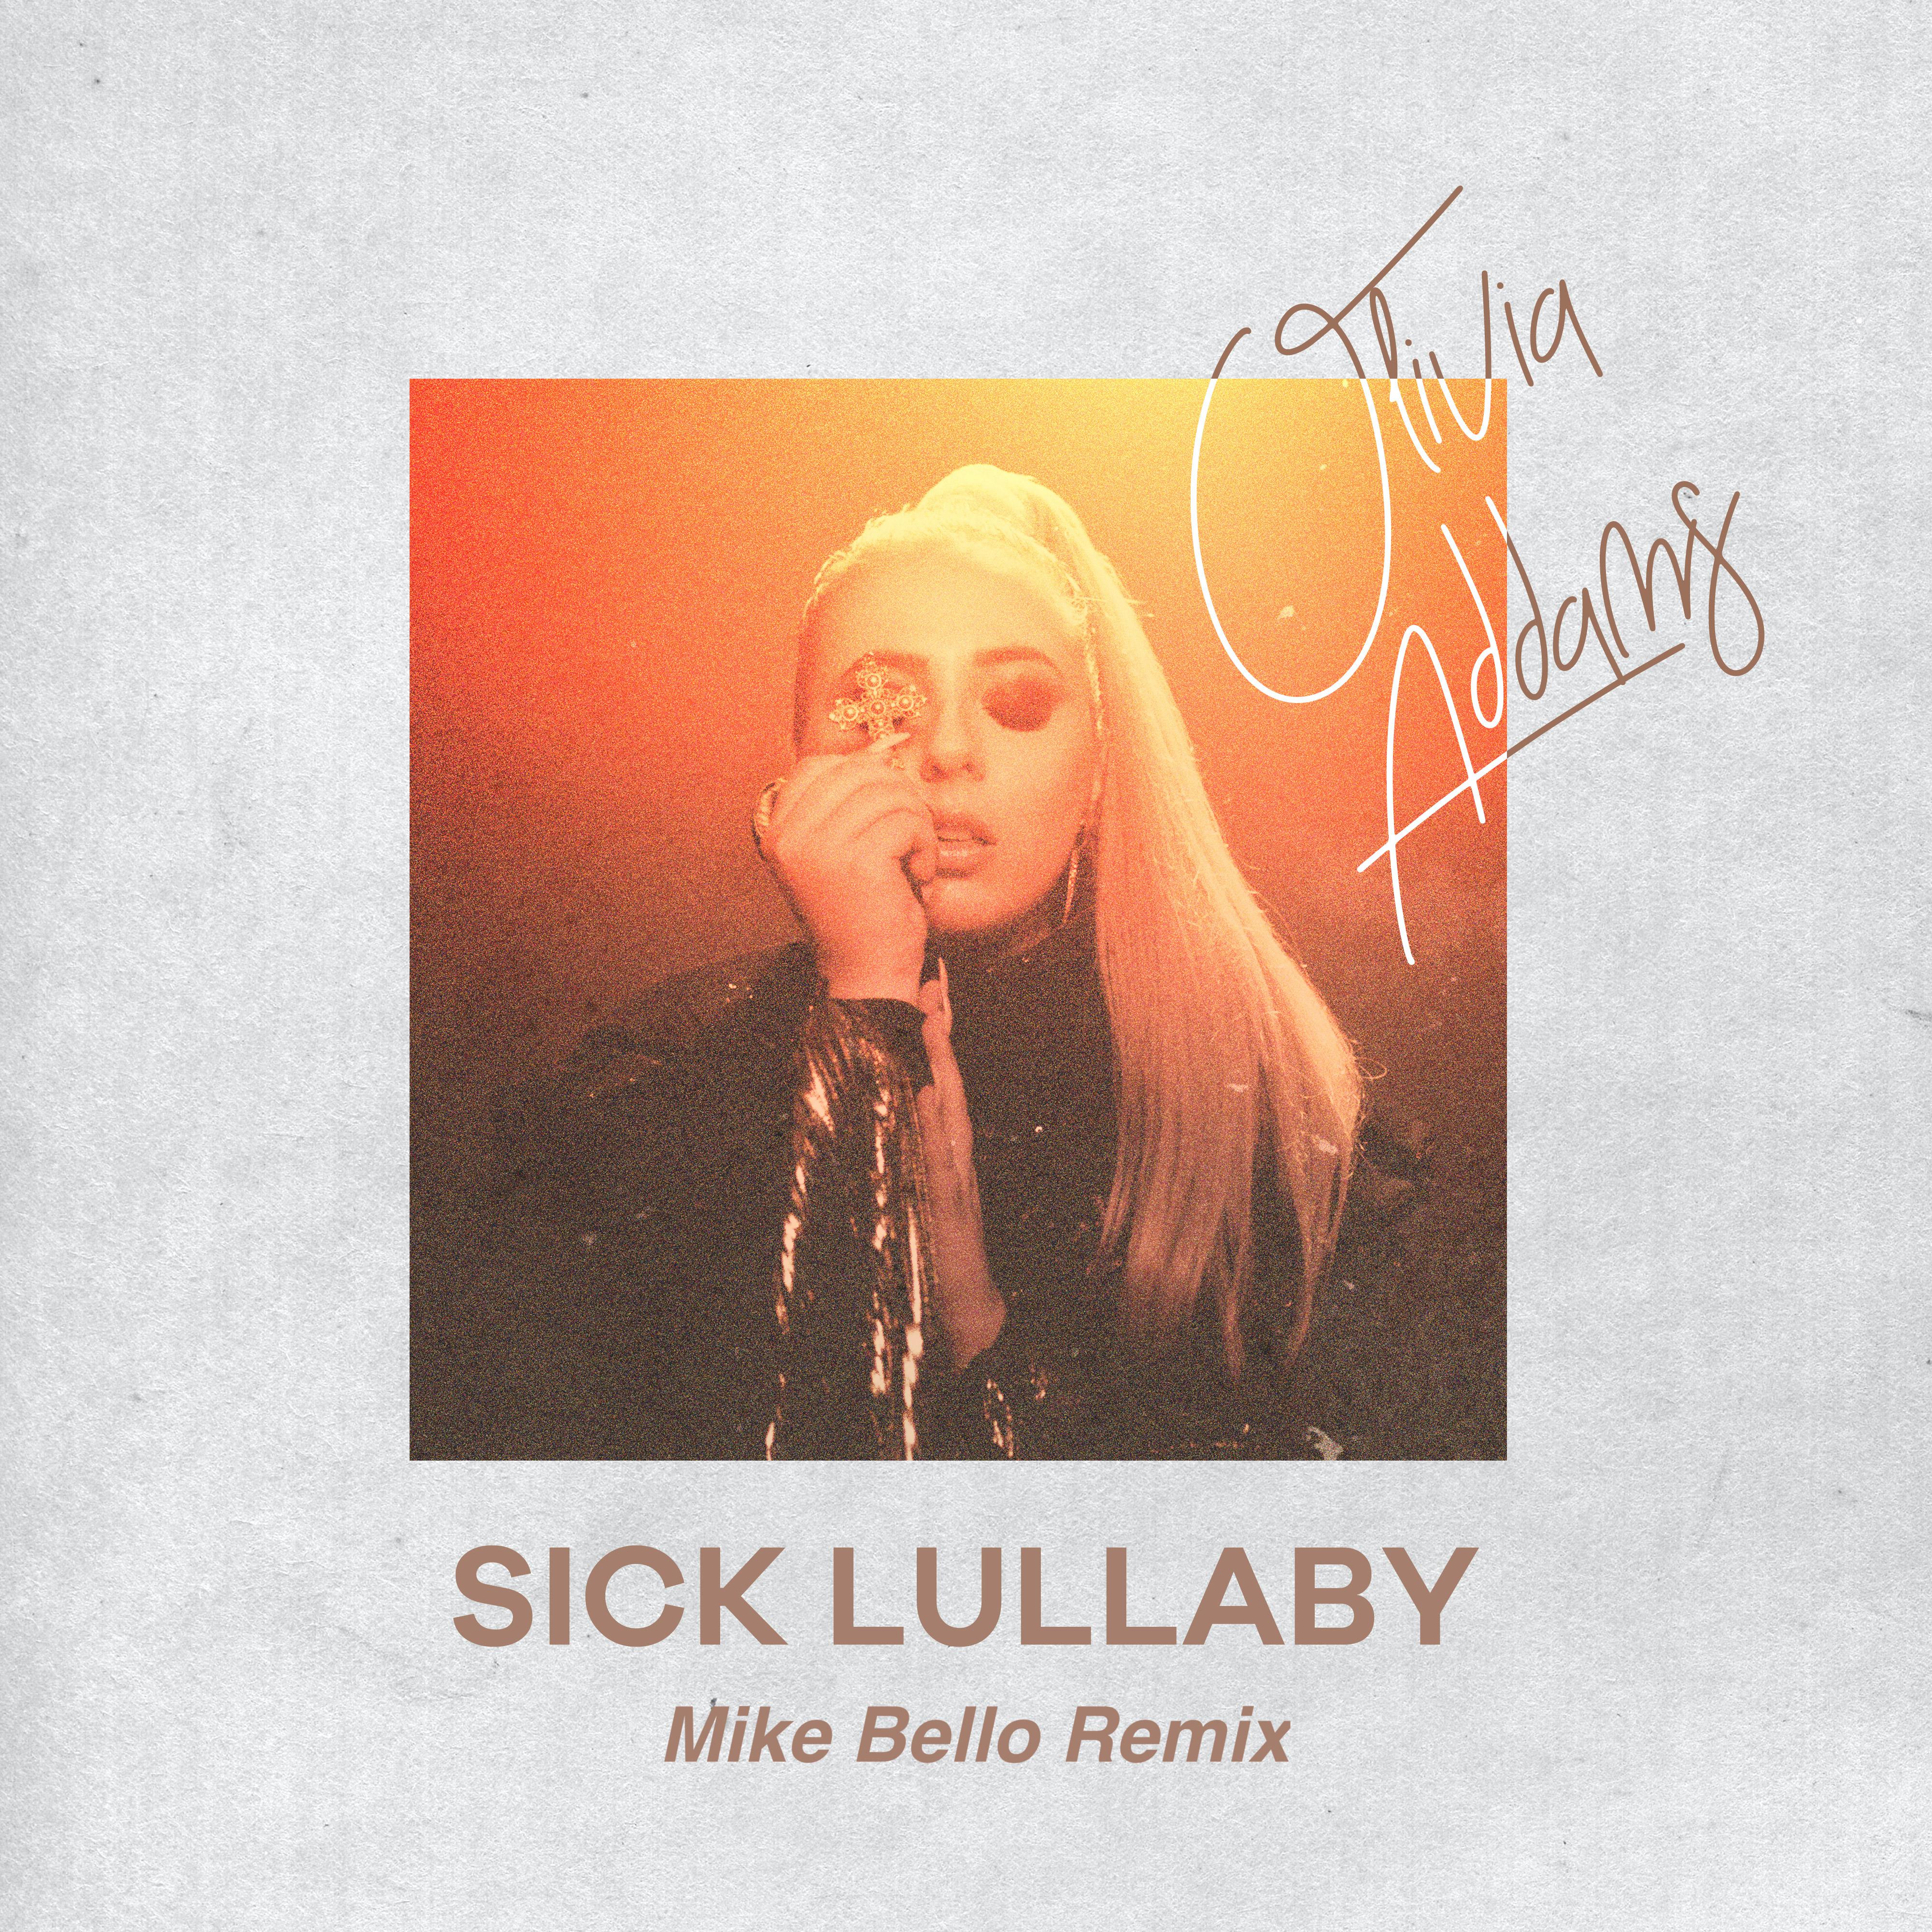 Olivia Addams - Sick Lullaby (Mike Bello Remix)